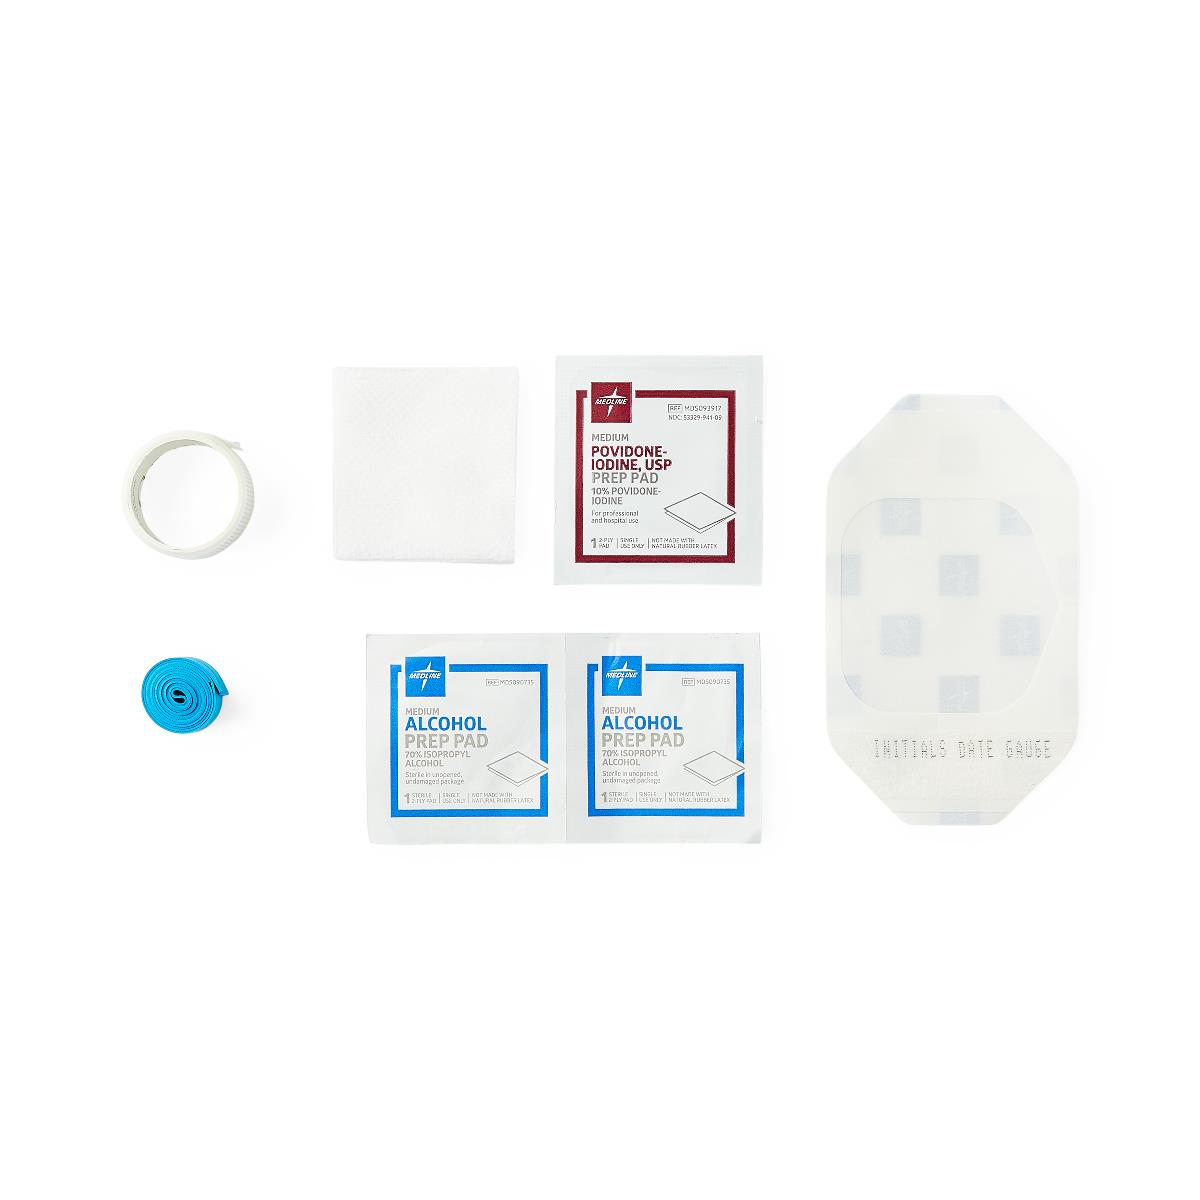 Medline IV Start Kits with ChloraPrep Skin Prep | Medline